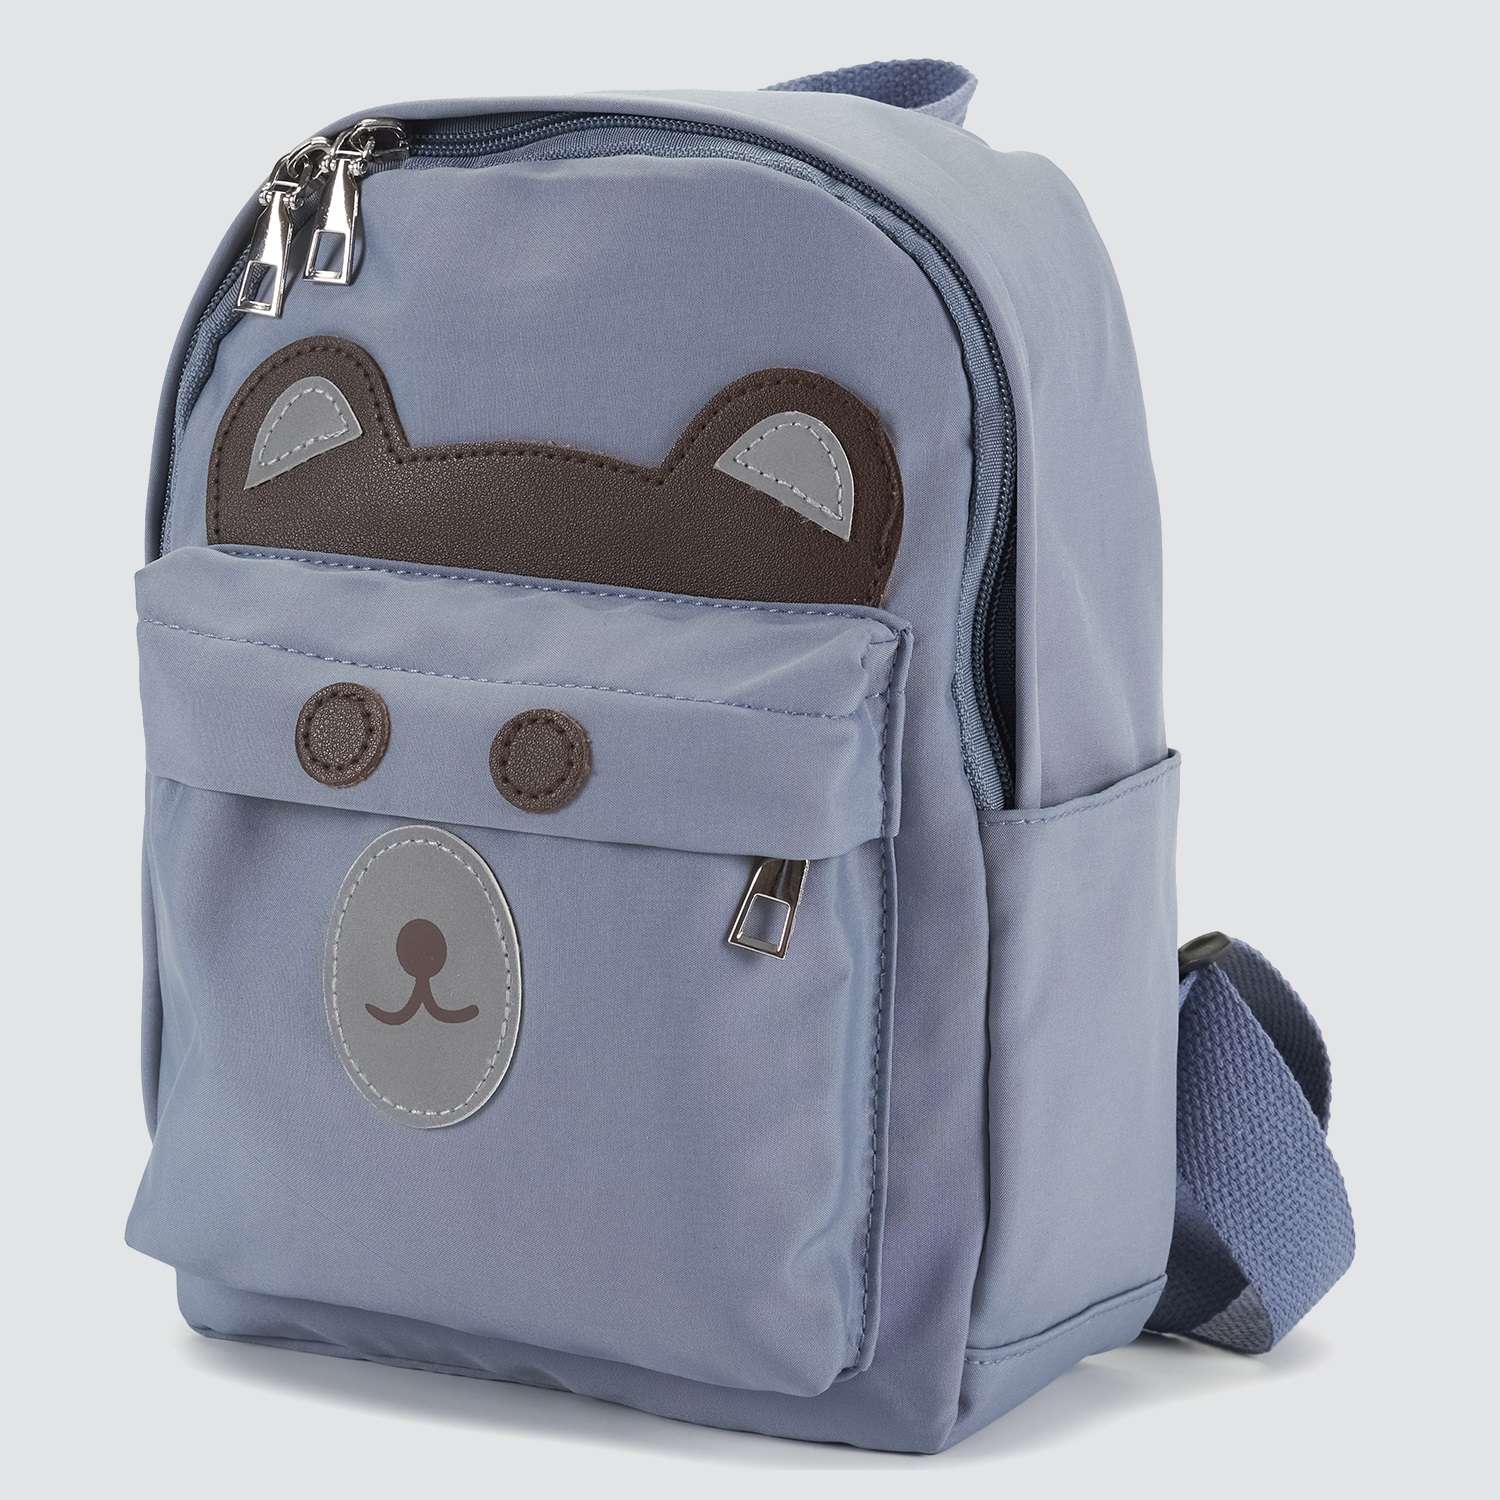 Детский рюкзак Journey 26801 синий медвежонок - фото 1